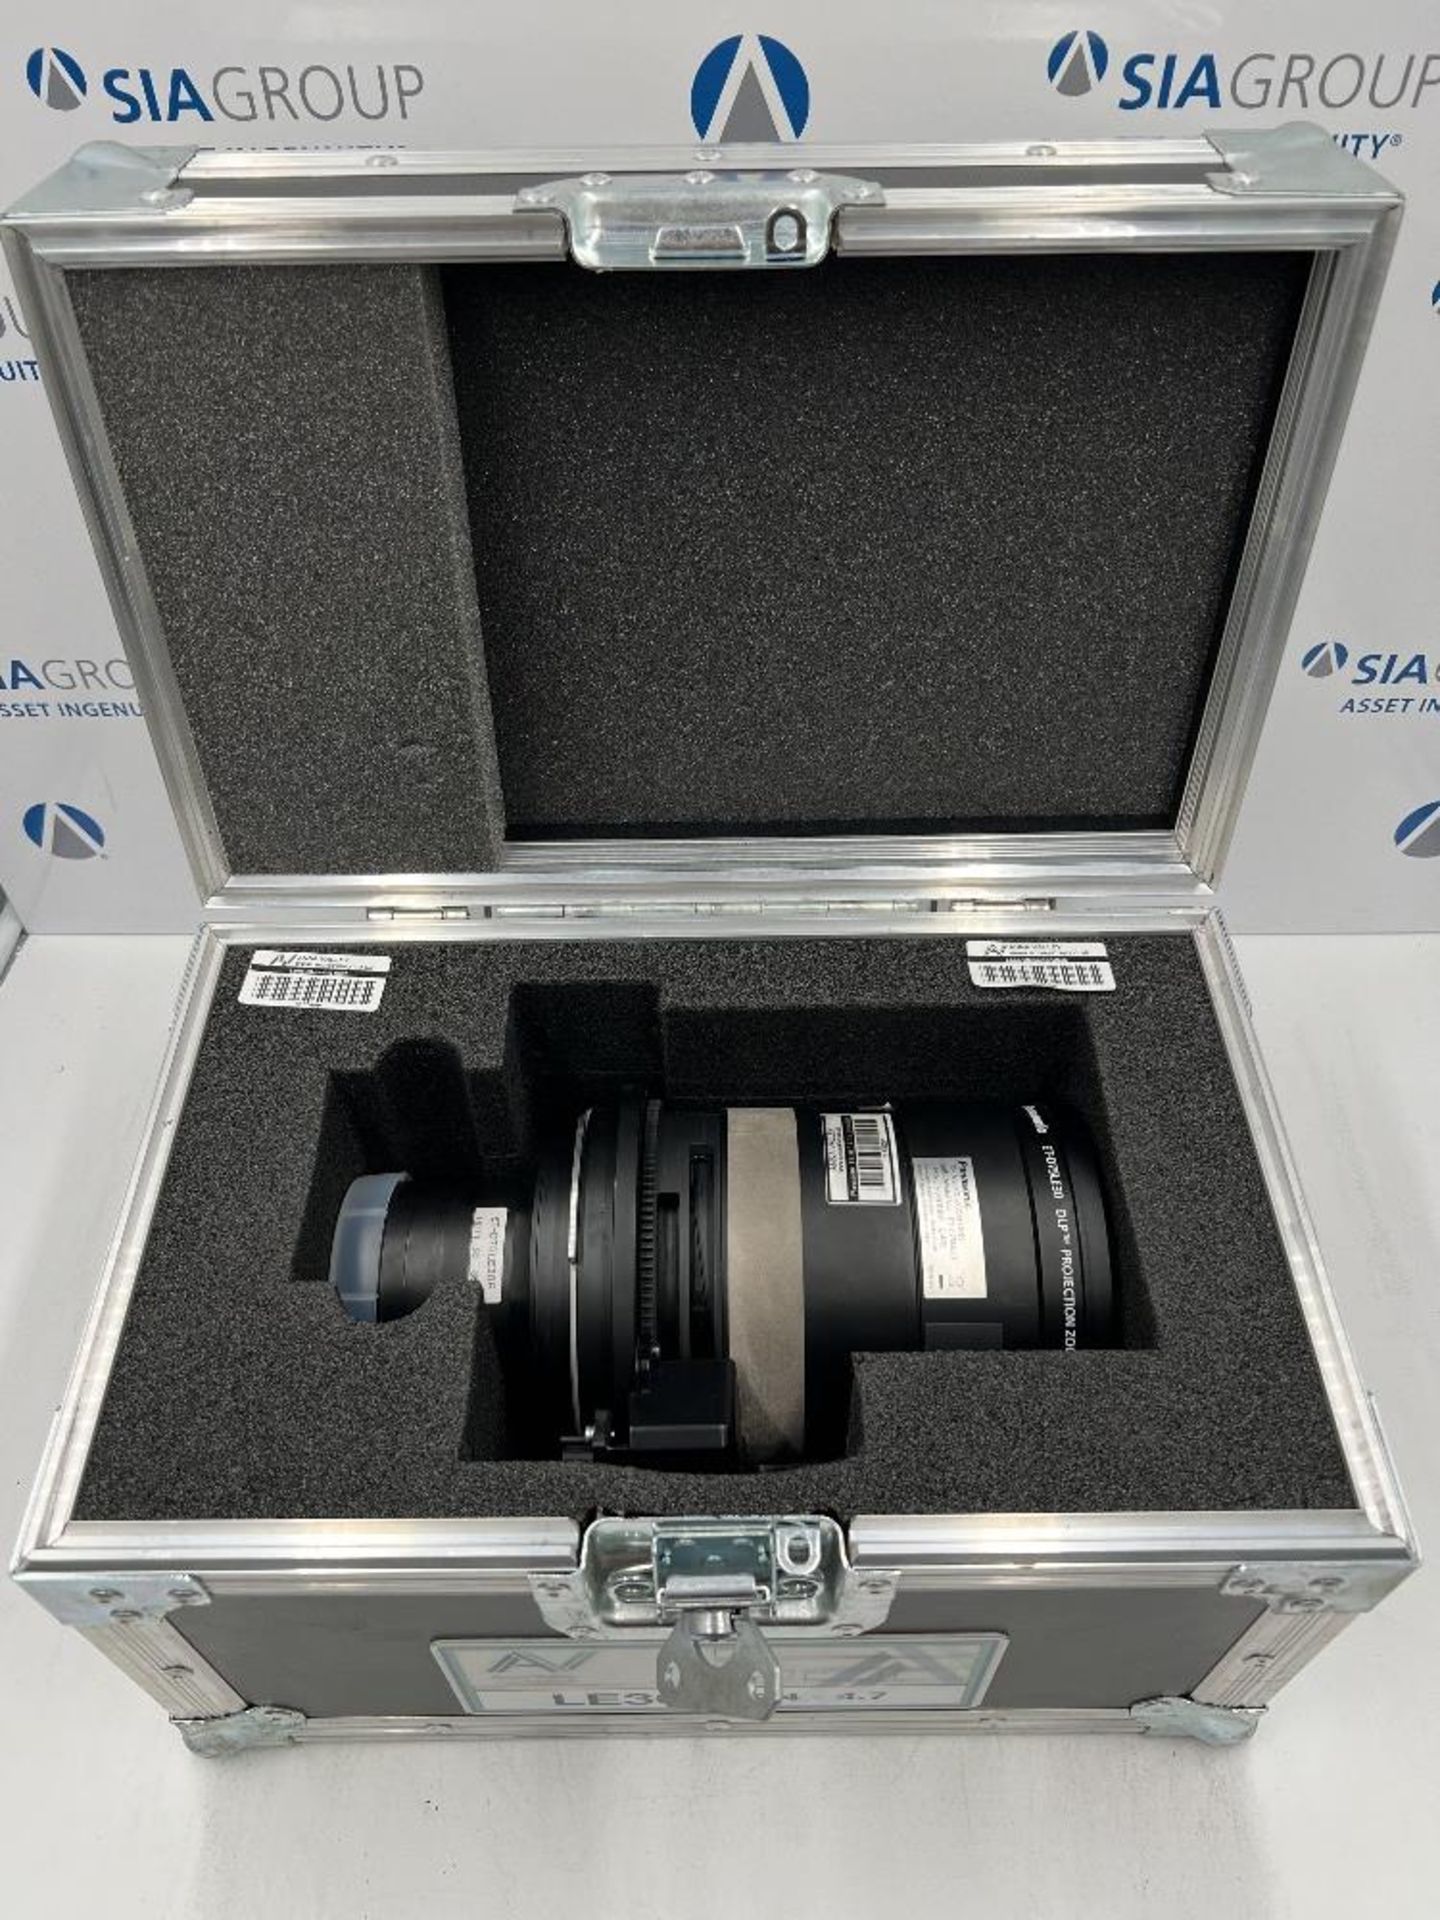 Panasonic ET-D75LE30 2.4-4.7 Projection Zoom Lens With Carrier Case - Image 6 of 8